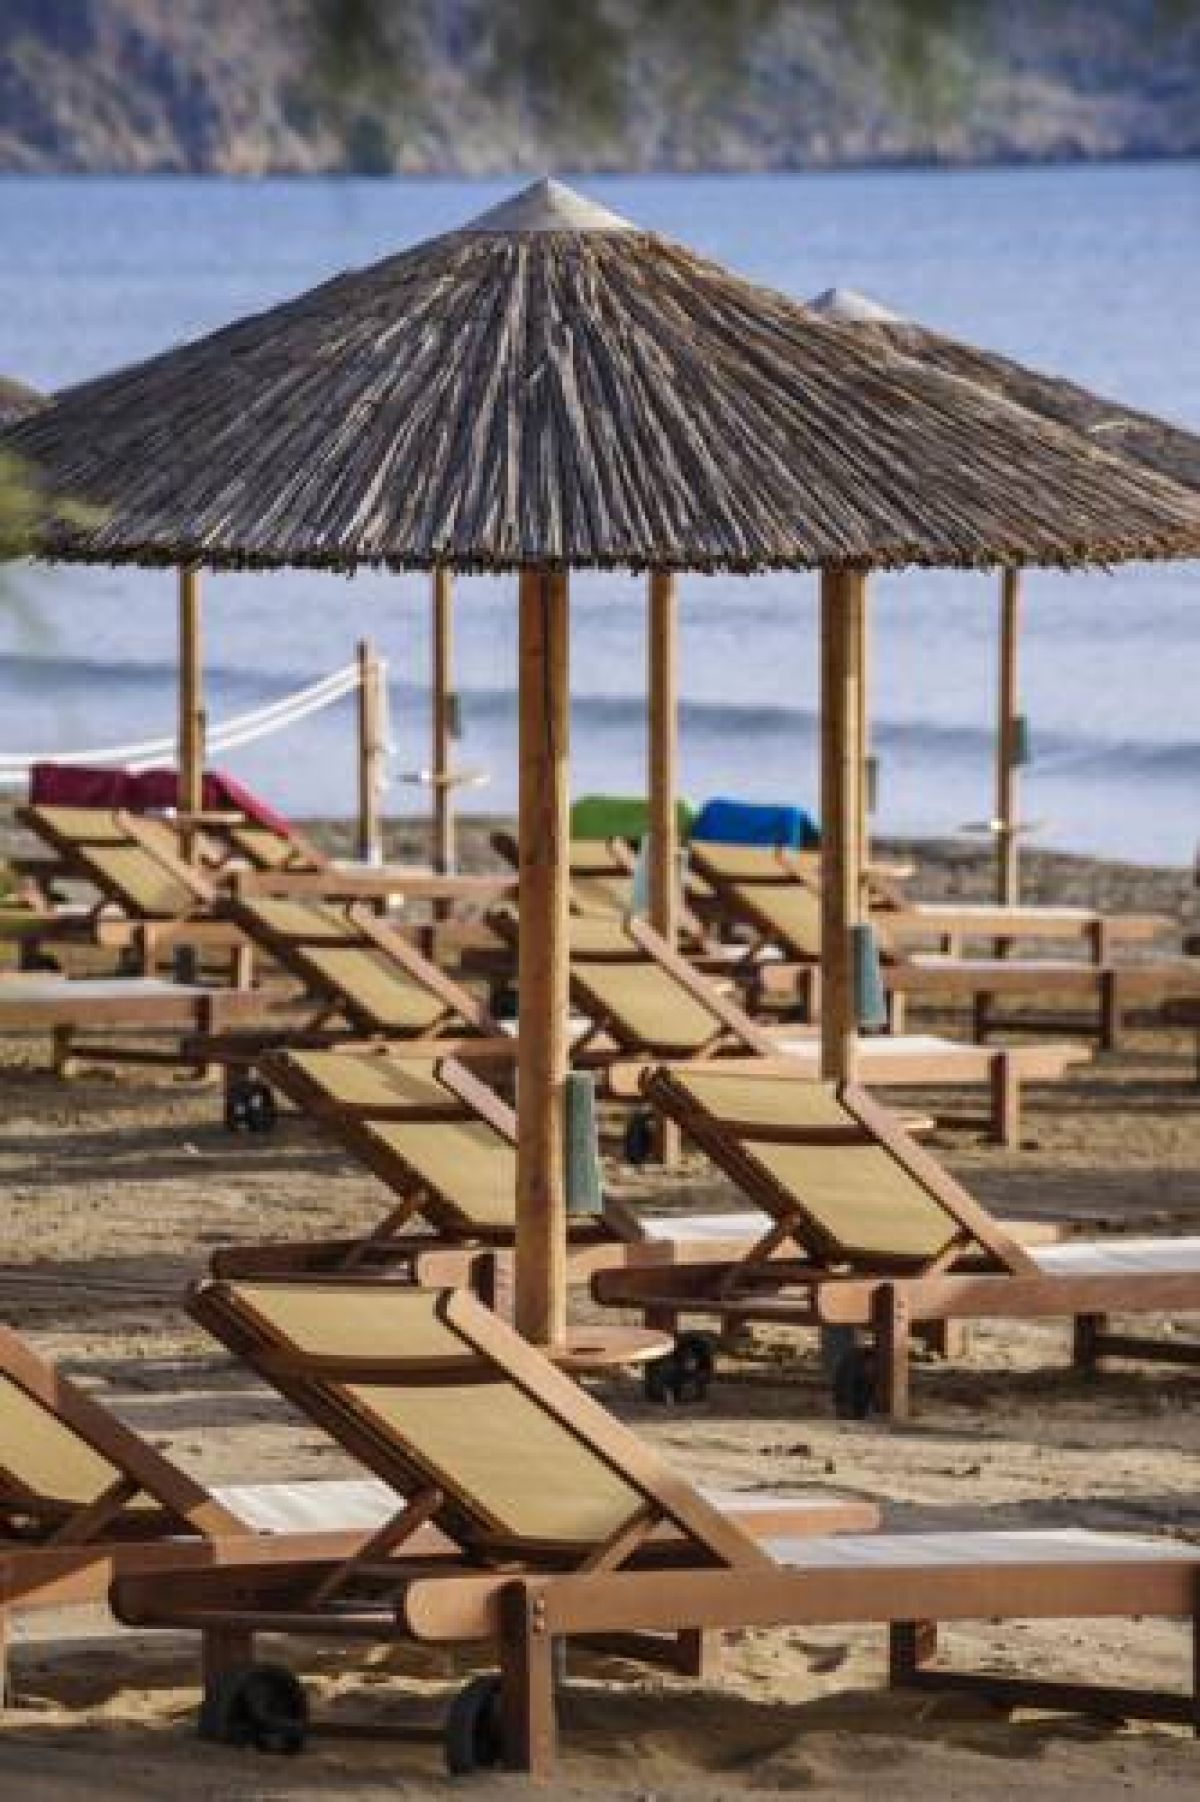 Amalthia Beach Resort (Adults Only)